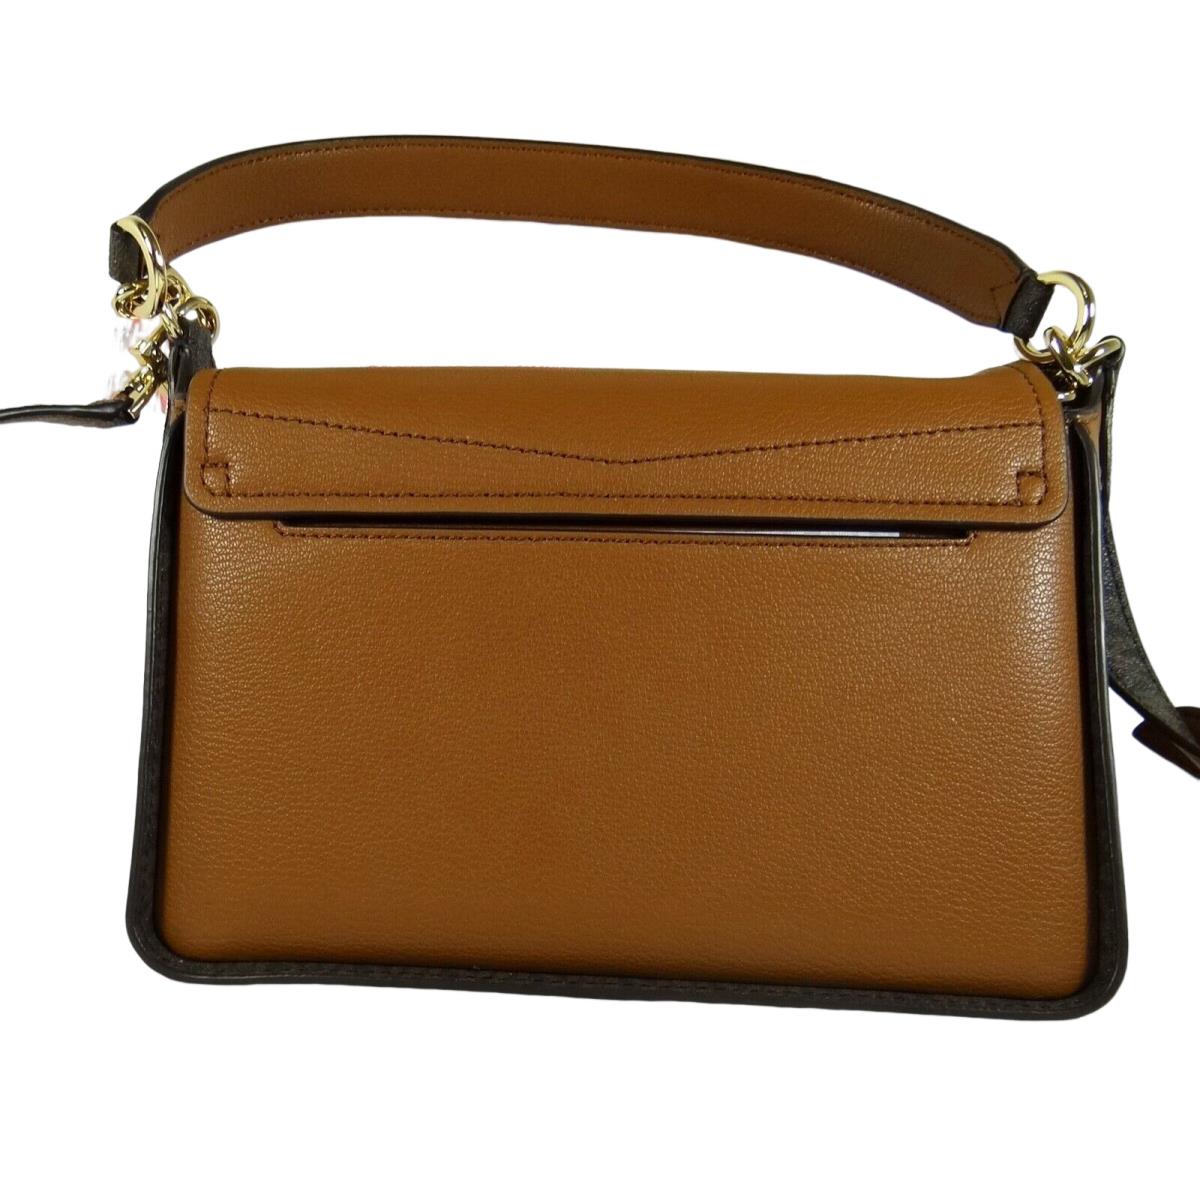 Michael Kors Sylvia Medium Convertible Flap Leather Shoulder Bag